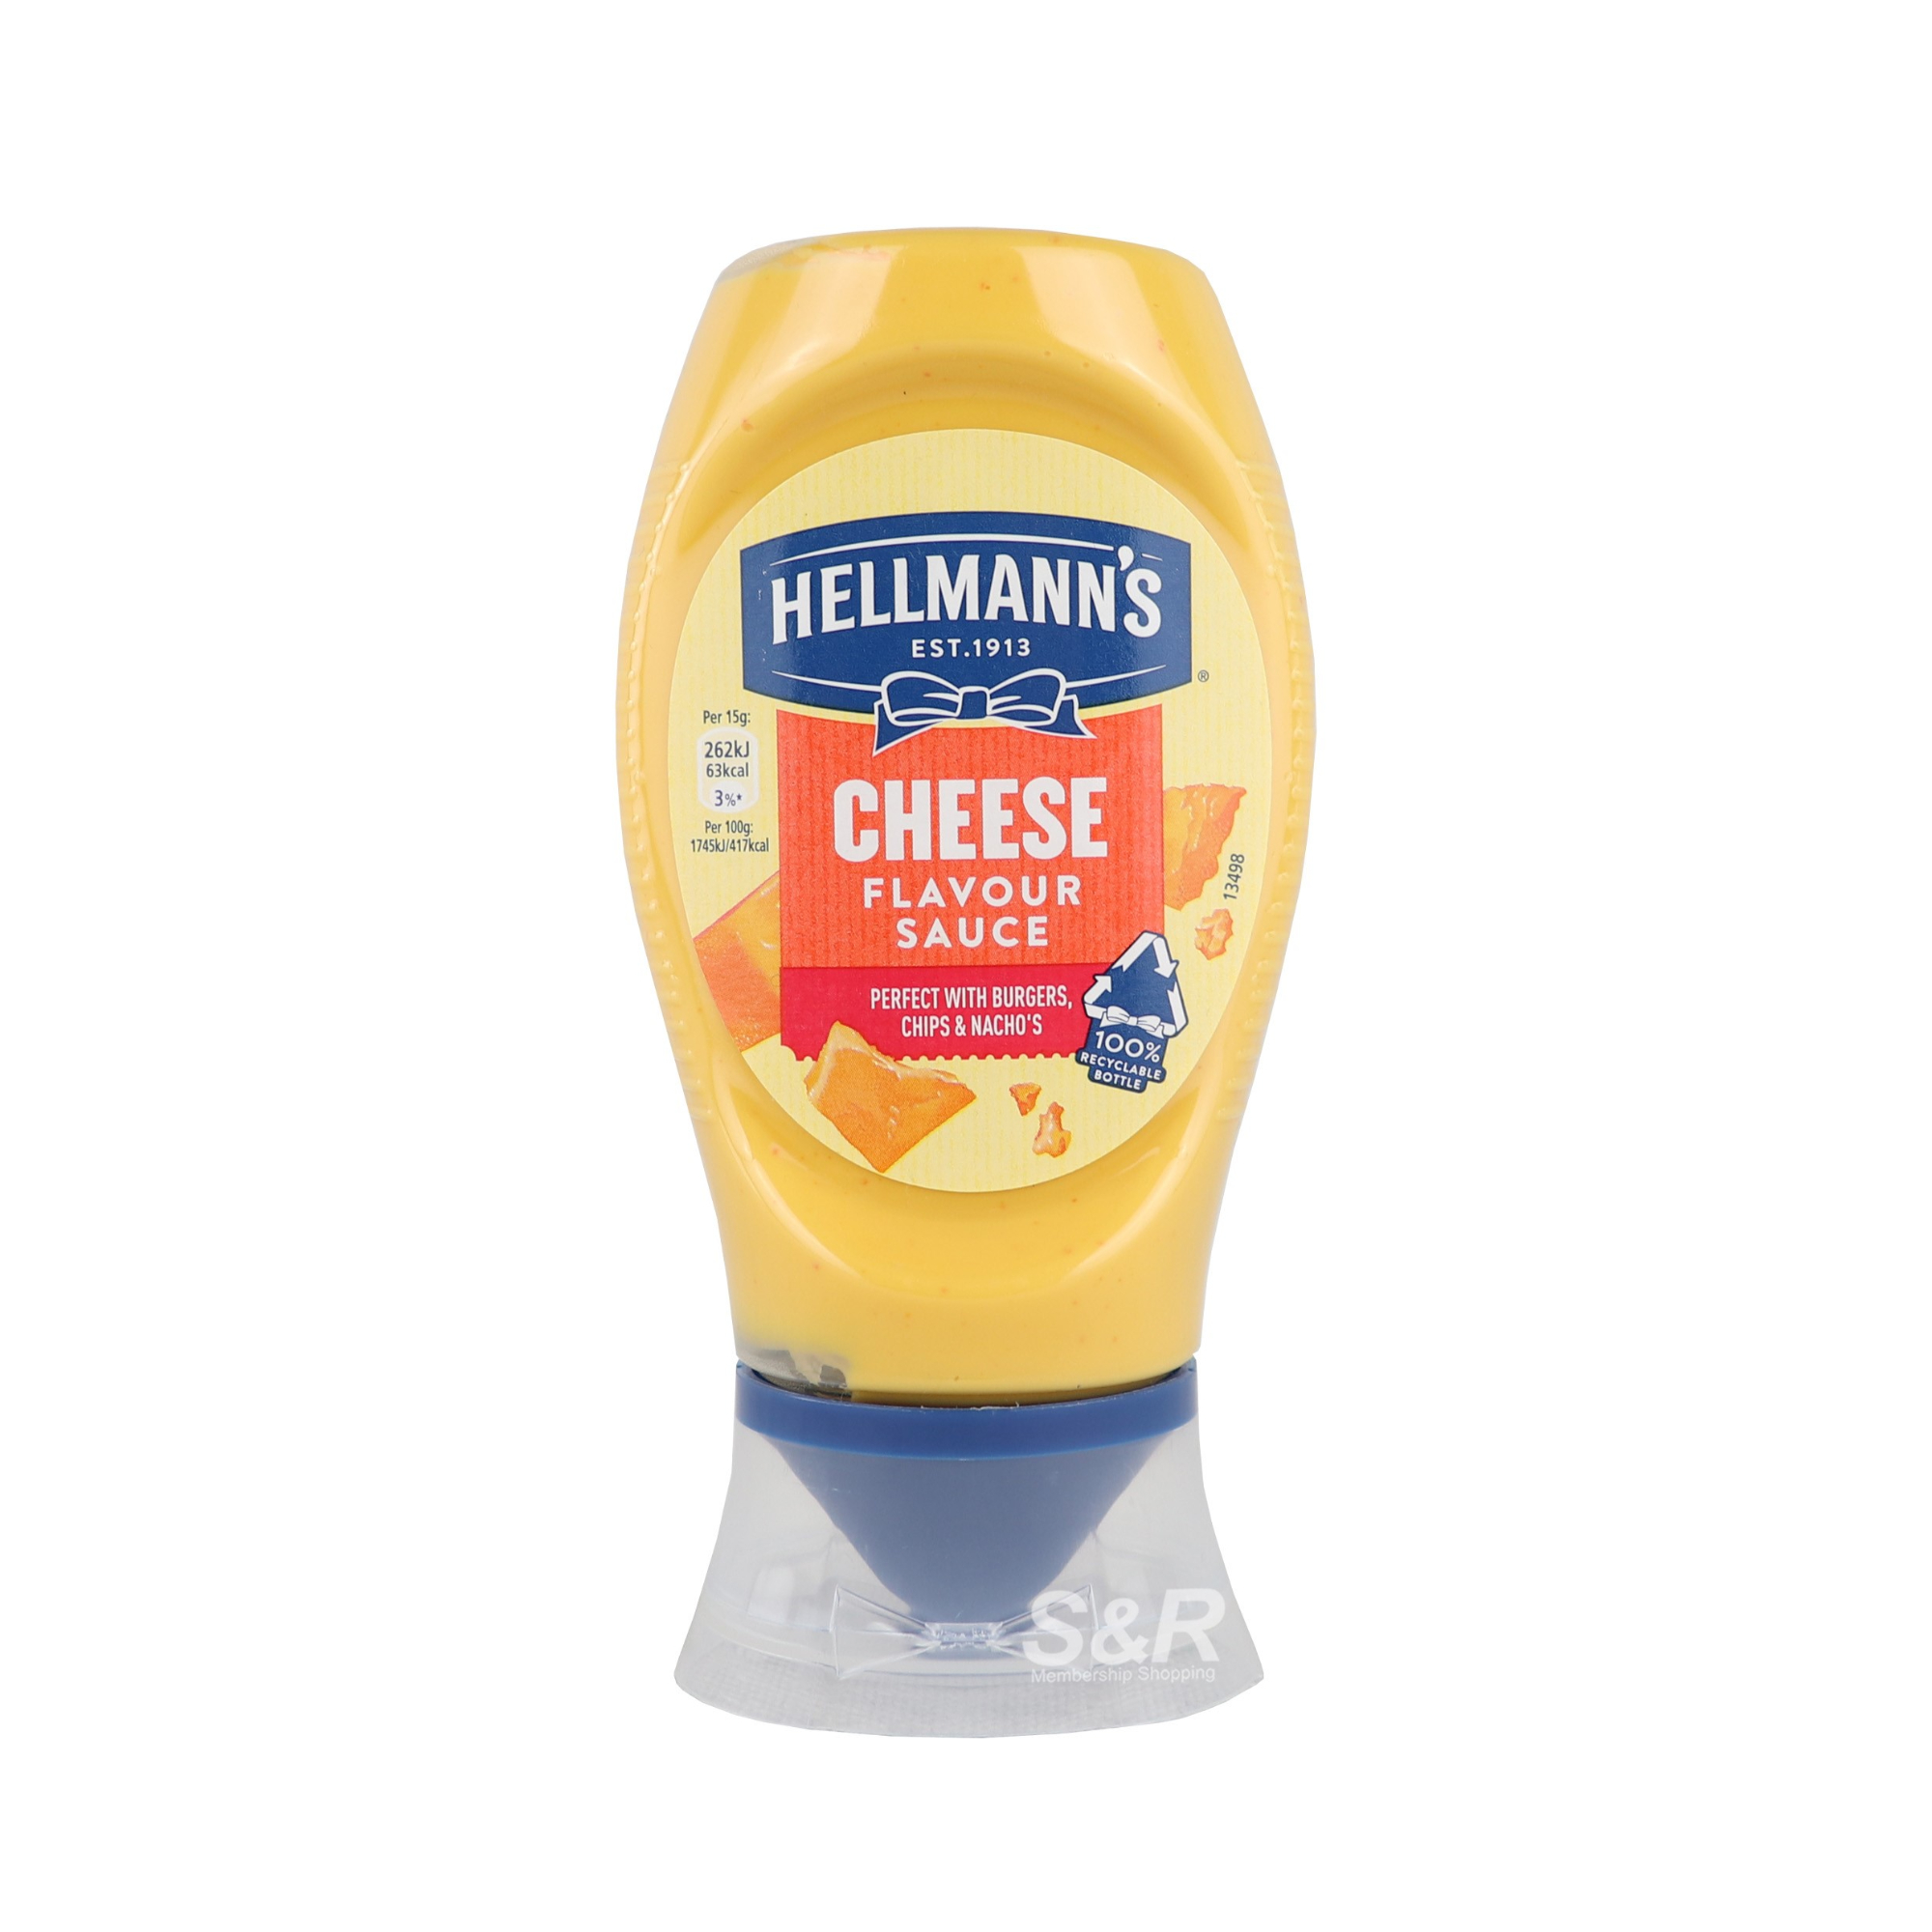 Hellmann's Cheese Flavour Sauce 250g